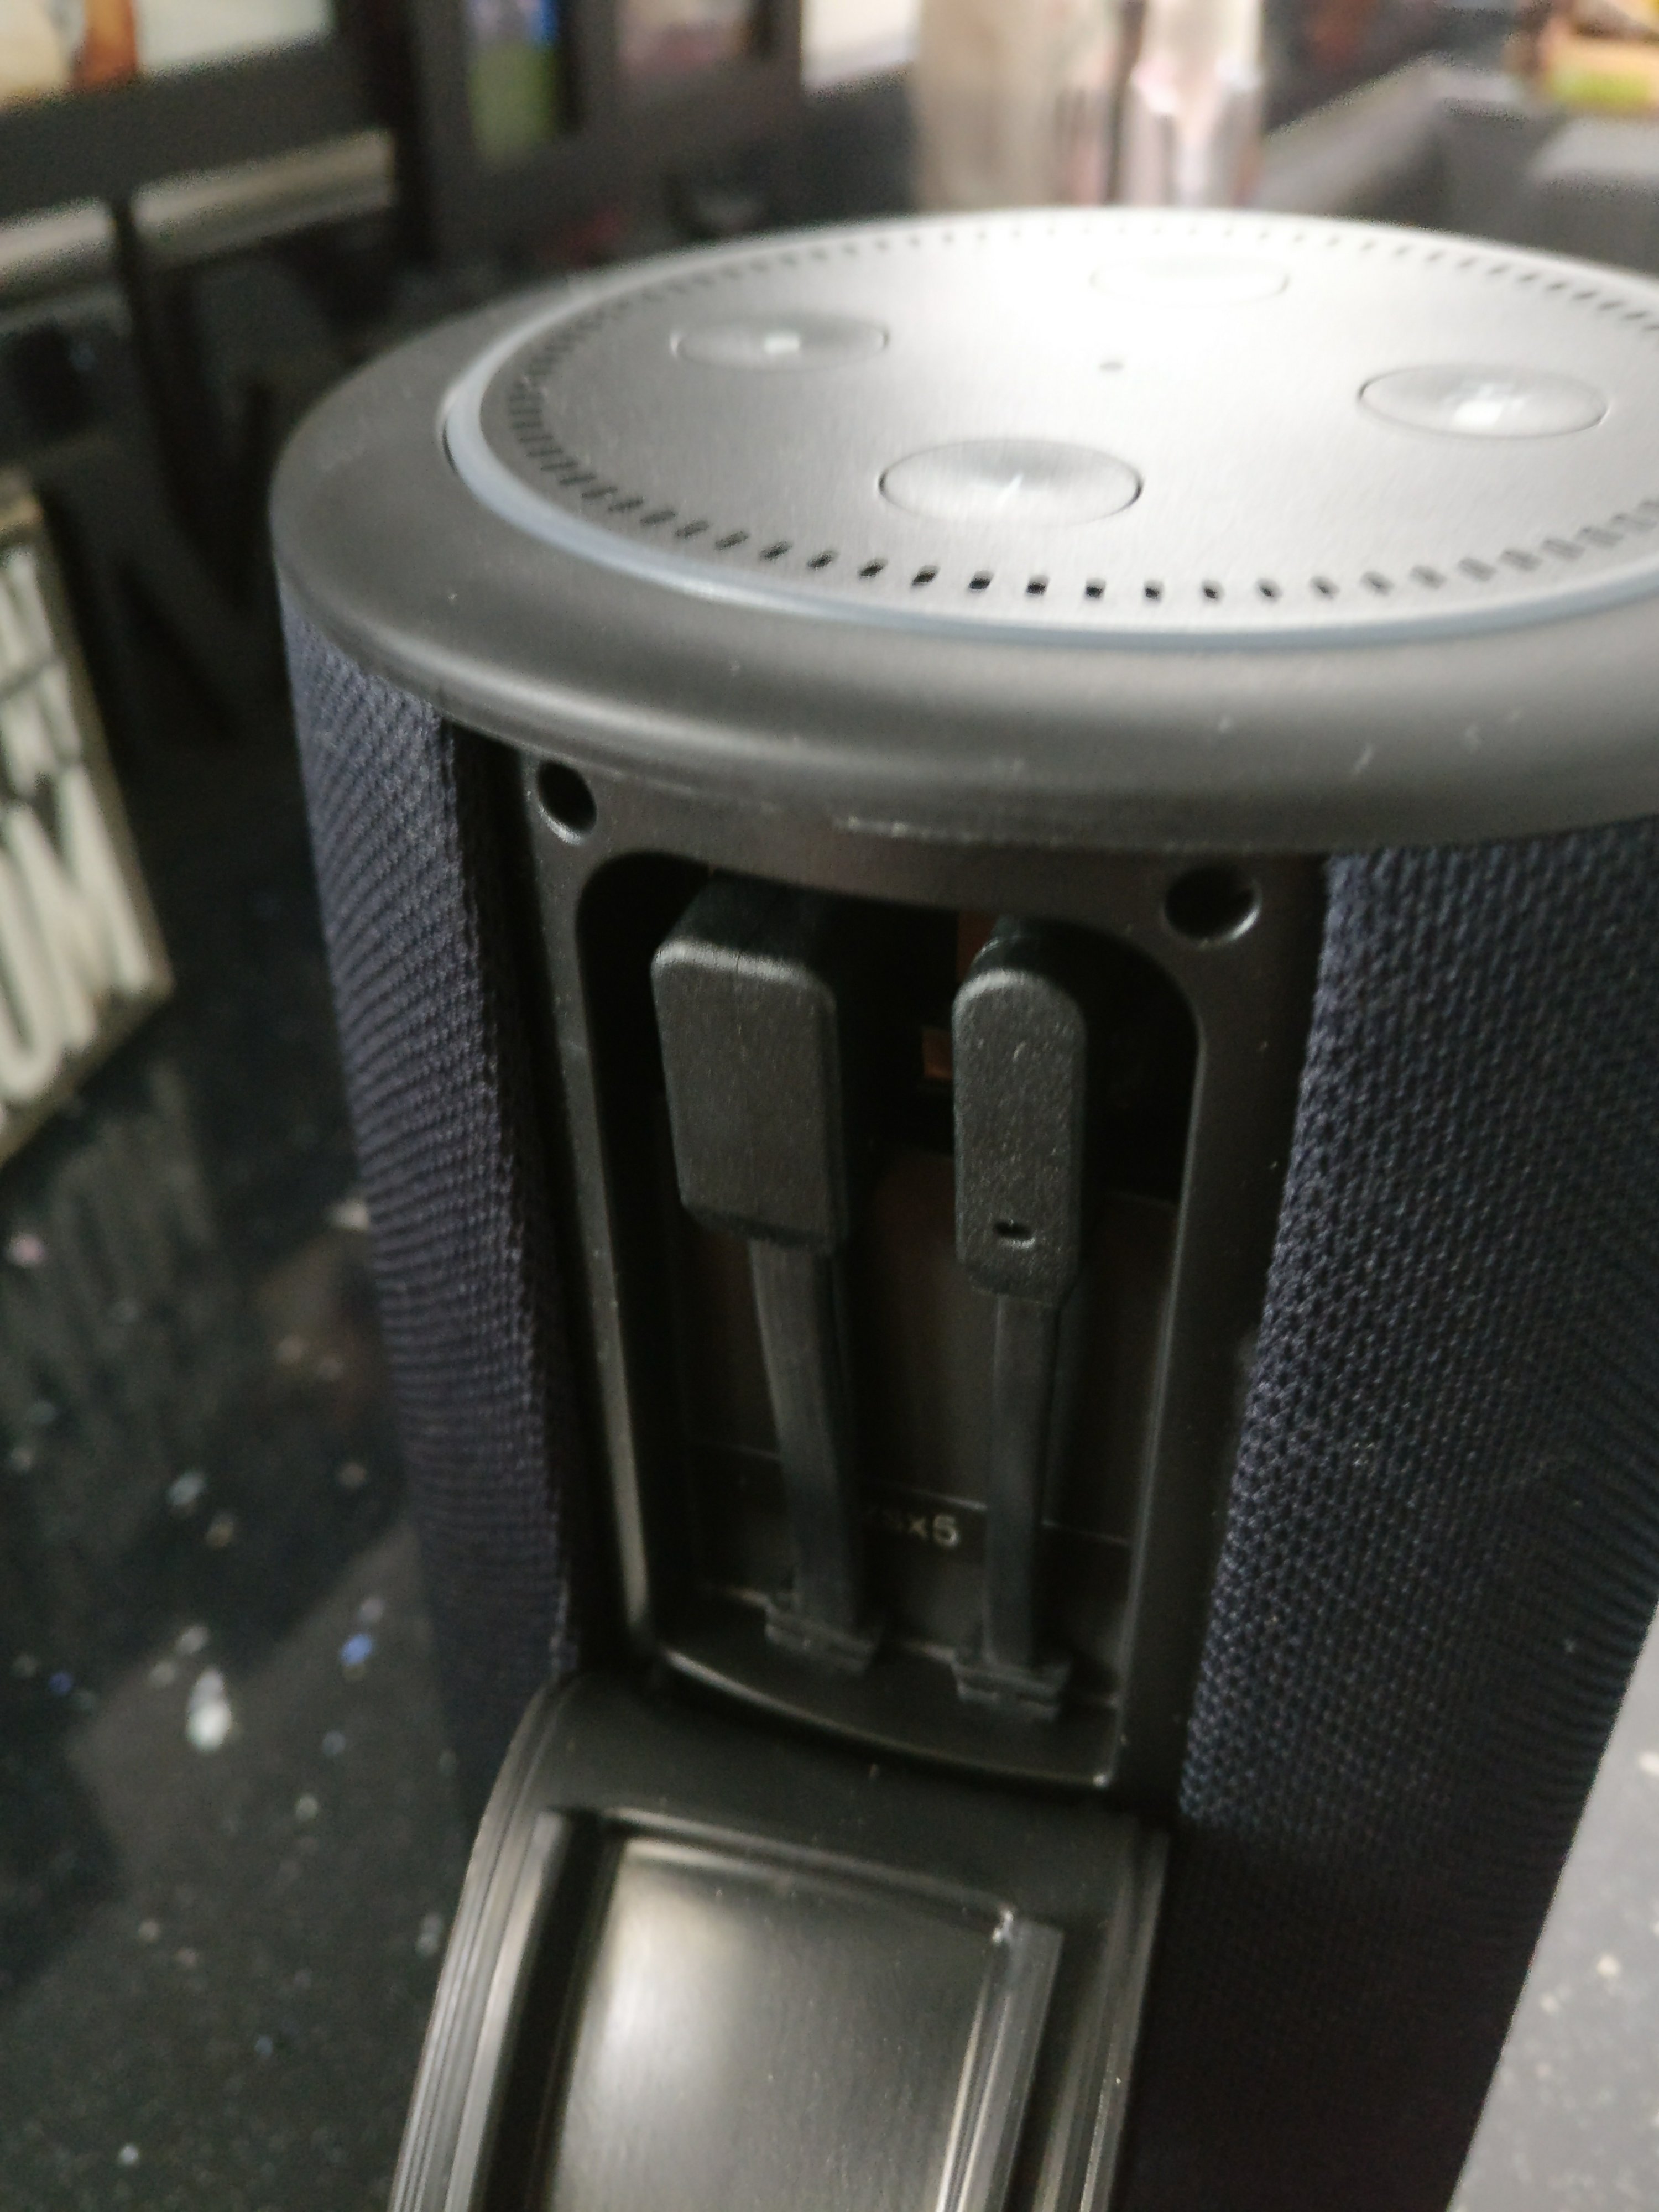 Vaux   Amazon Echo Dot Powered Speaker   Review